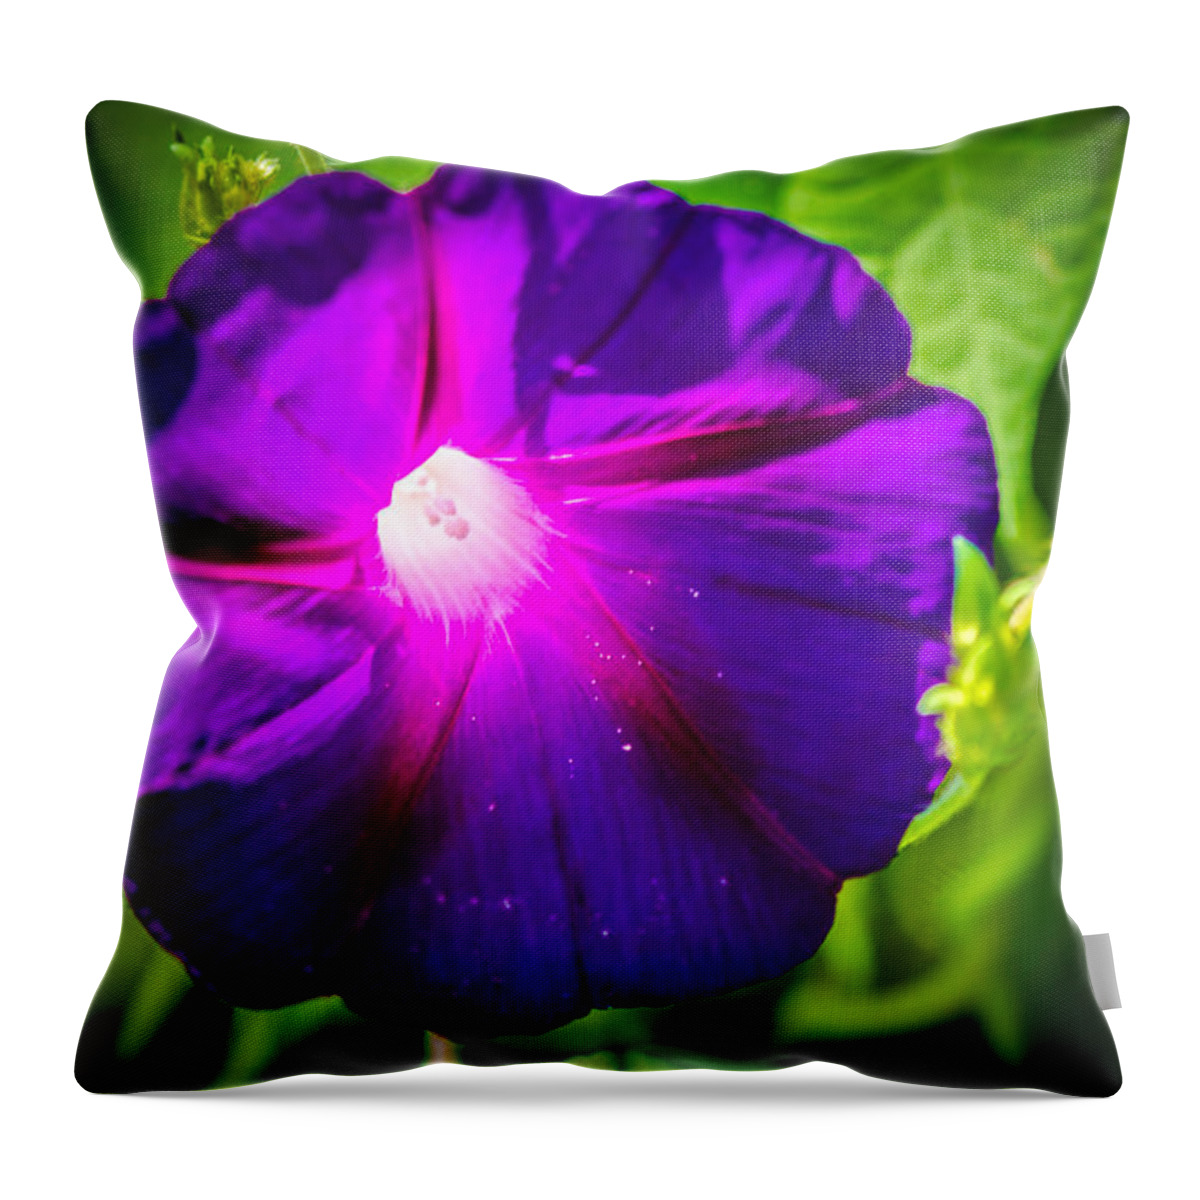 Flower Throw Pillow featuring the photograph Magic Flower by Bruce Pritchett